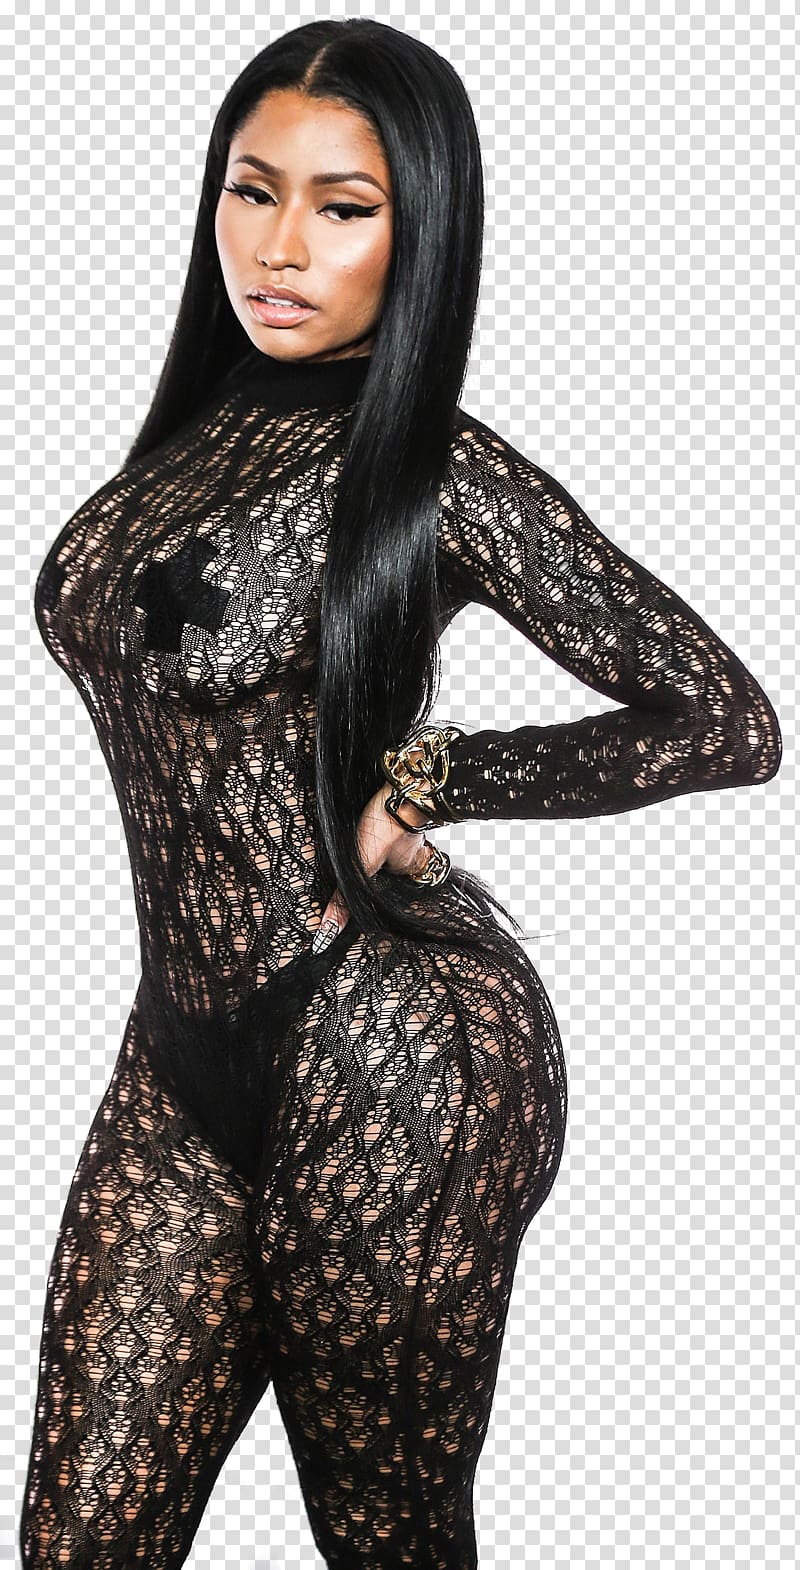 Nicki Minaj Rapper Singer Barbie Tingz Musician, Pu Leather transparent background PNG clipart